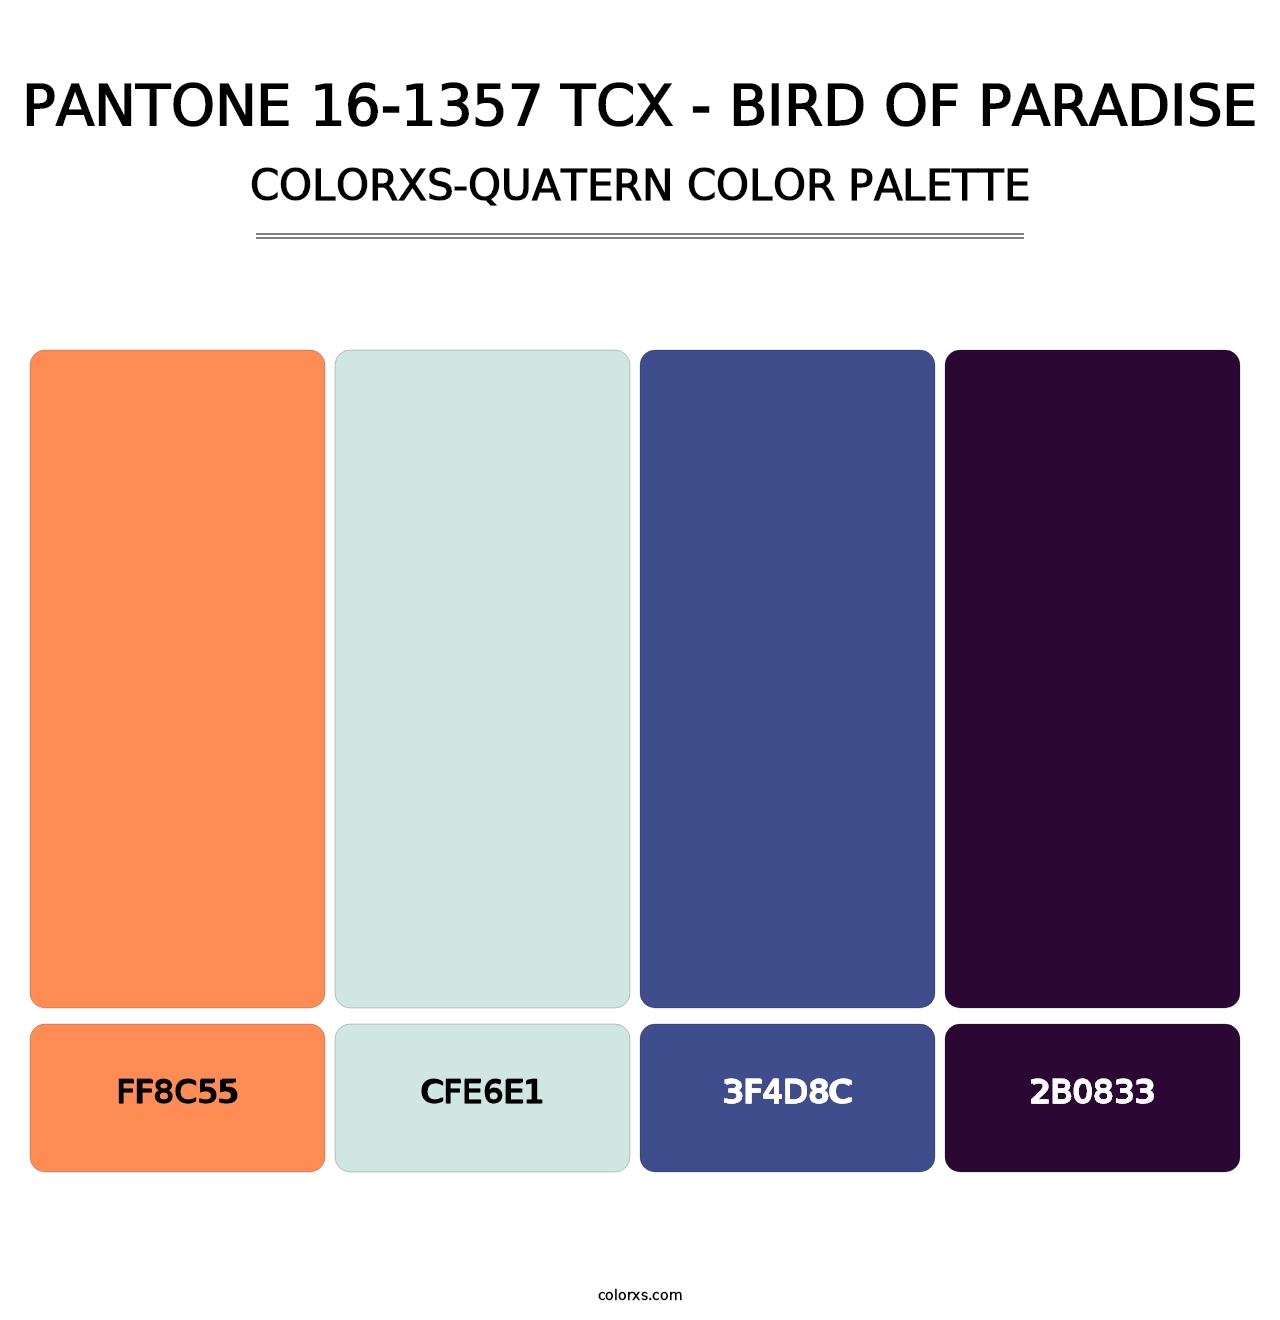 PANTONE 16-1357 TCX - Bird of Paradise - Colorxs Quatern Palette